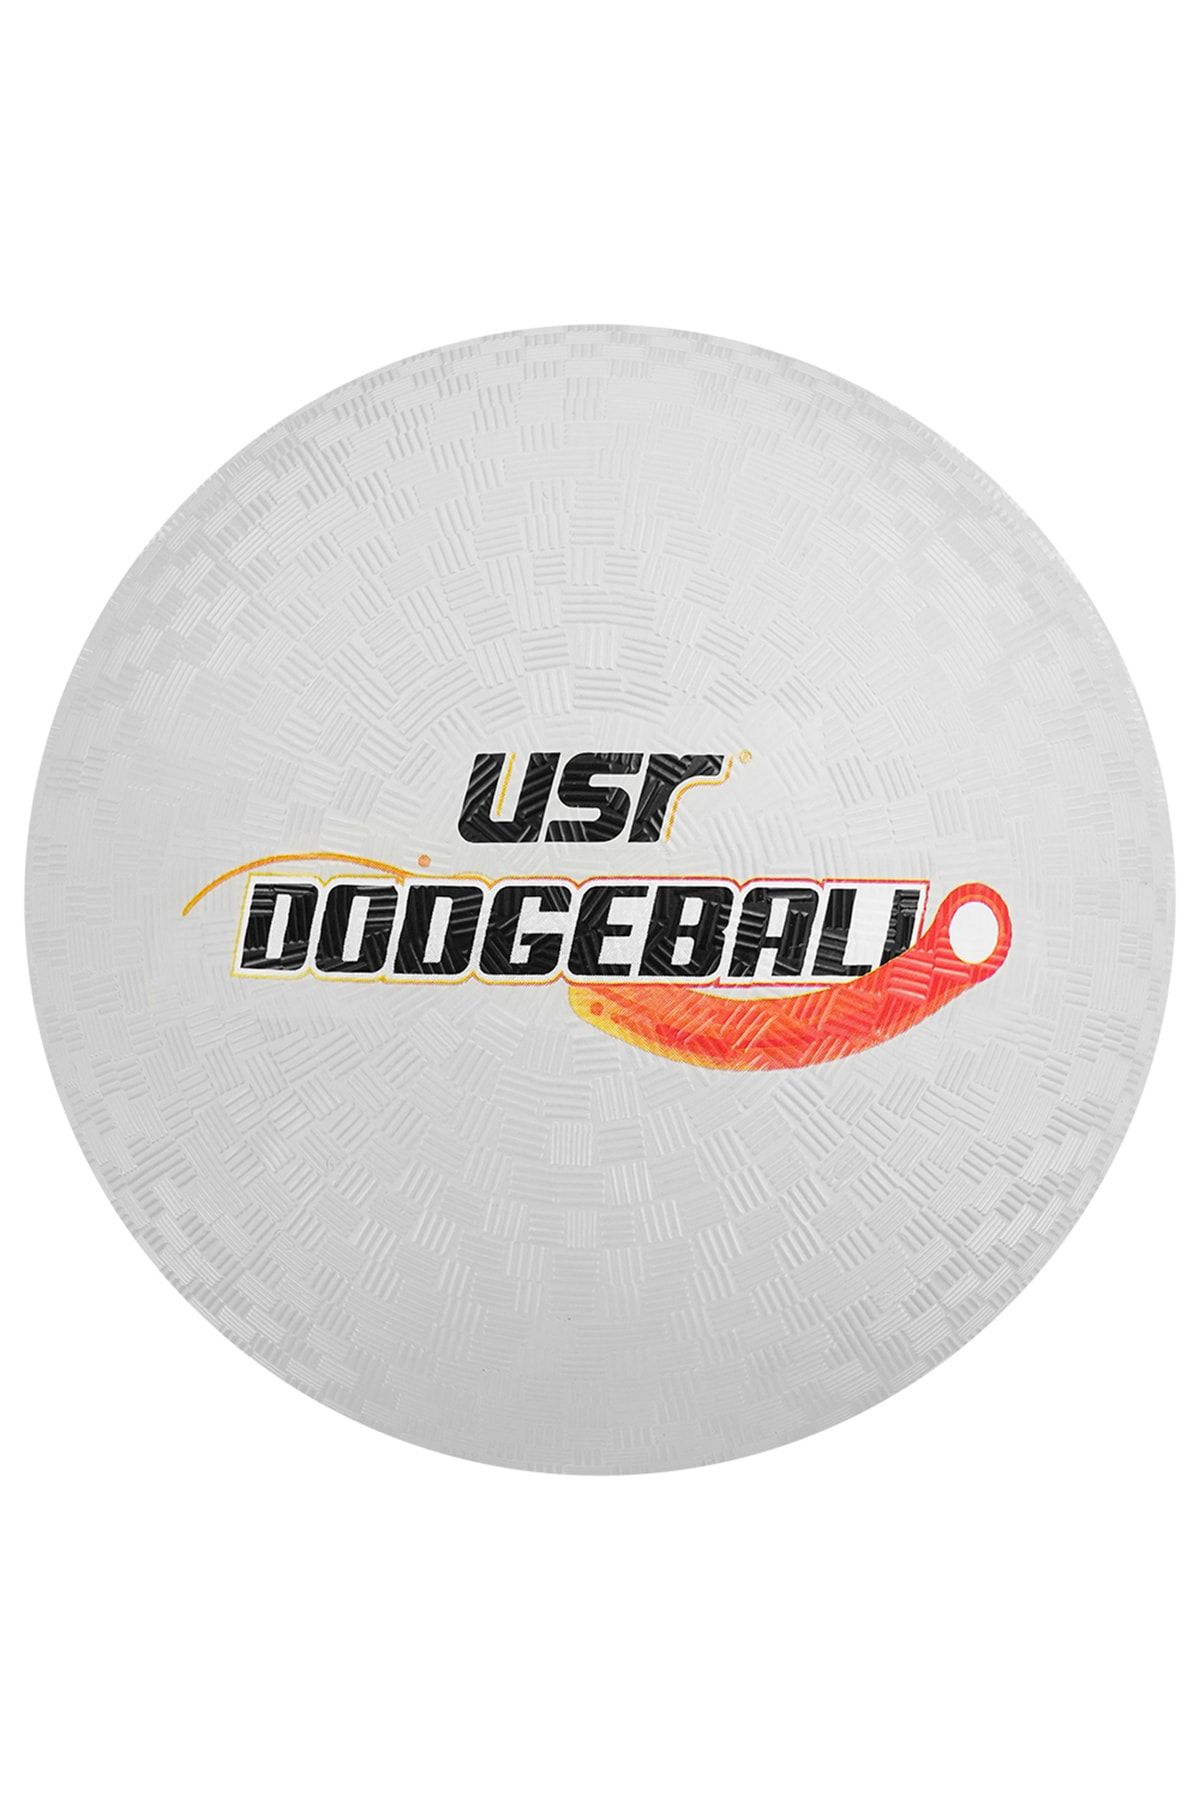 Usr Dodgeball1.1 Yakan Top